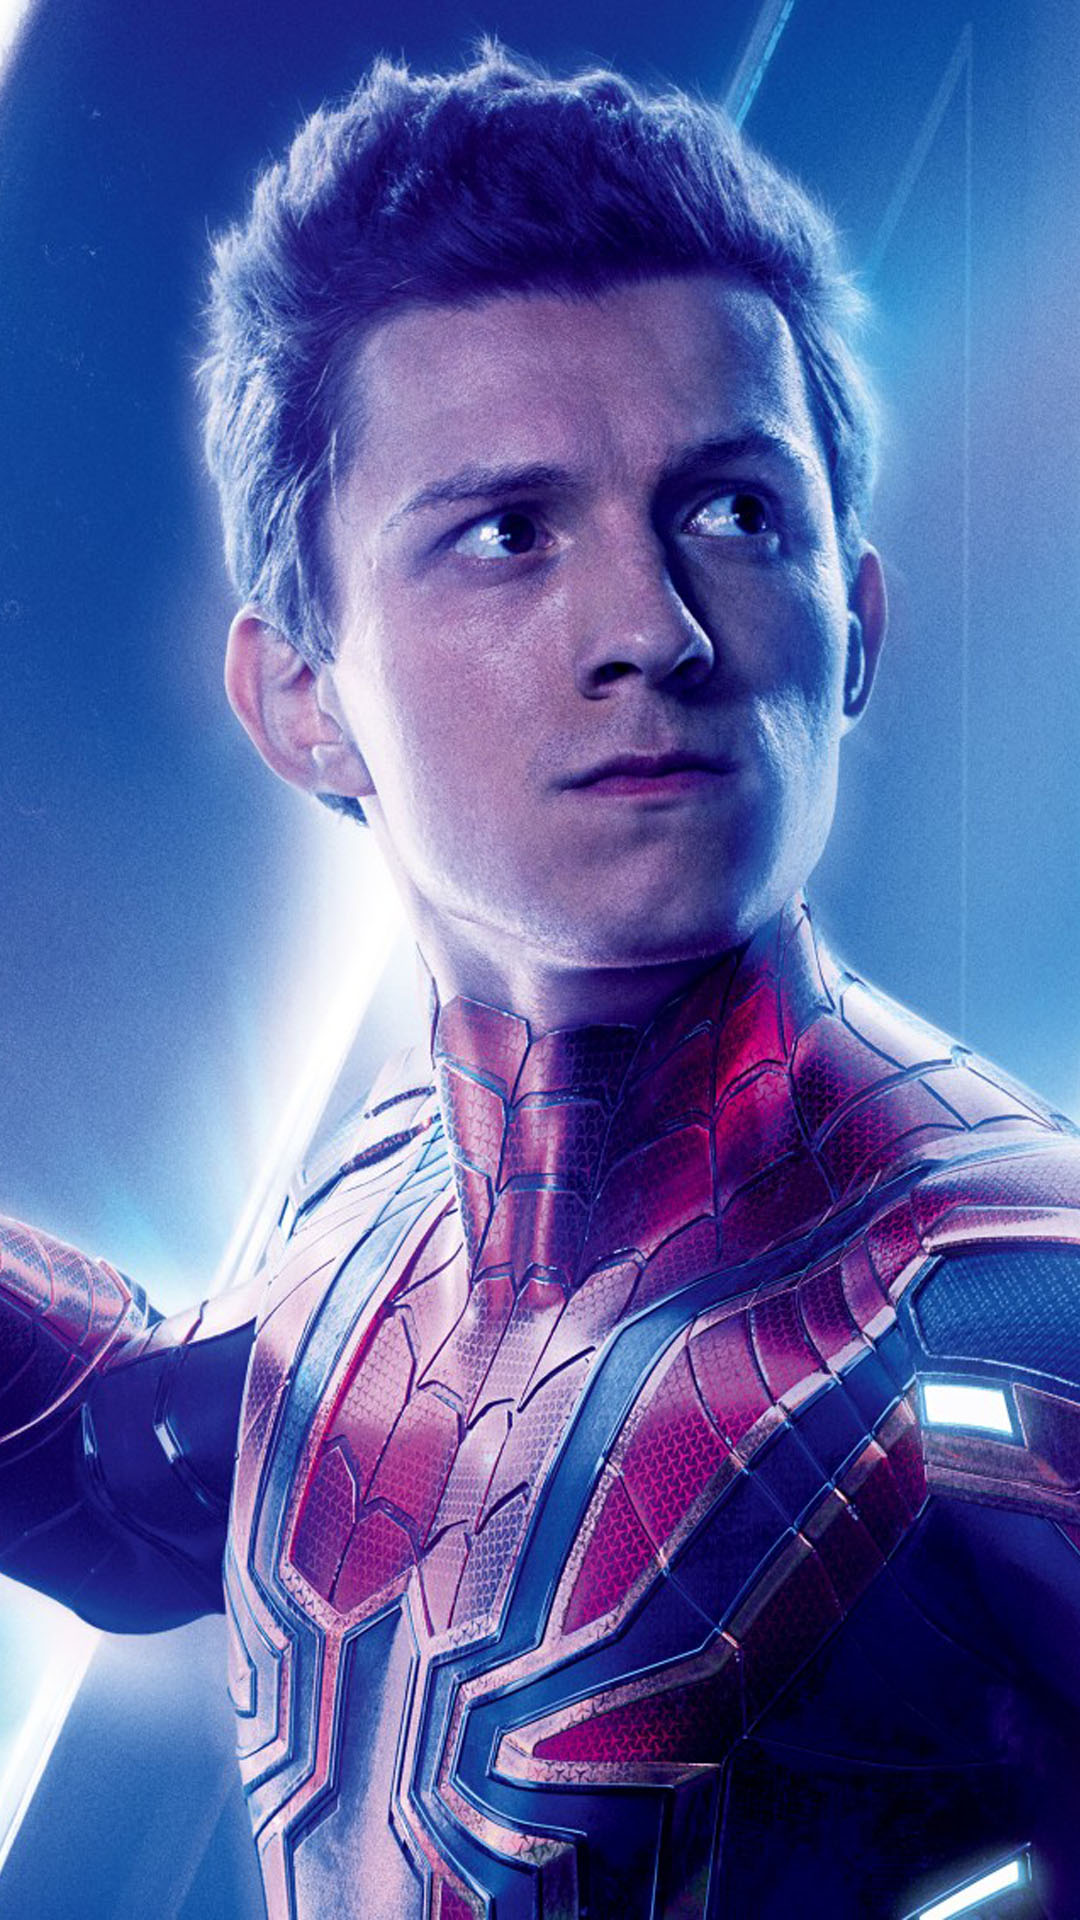 Spider-man In Avengers Infinity War 4K Ultra HD Mobile Wallpaper